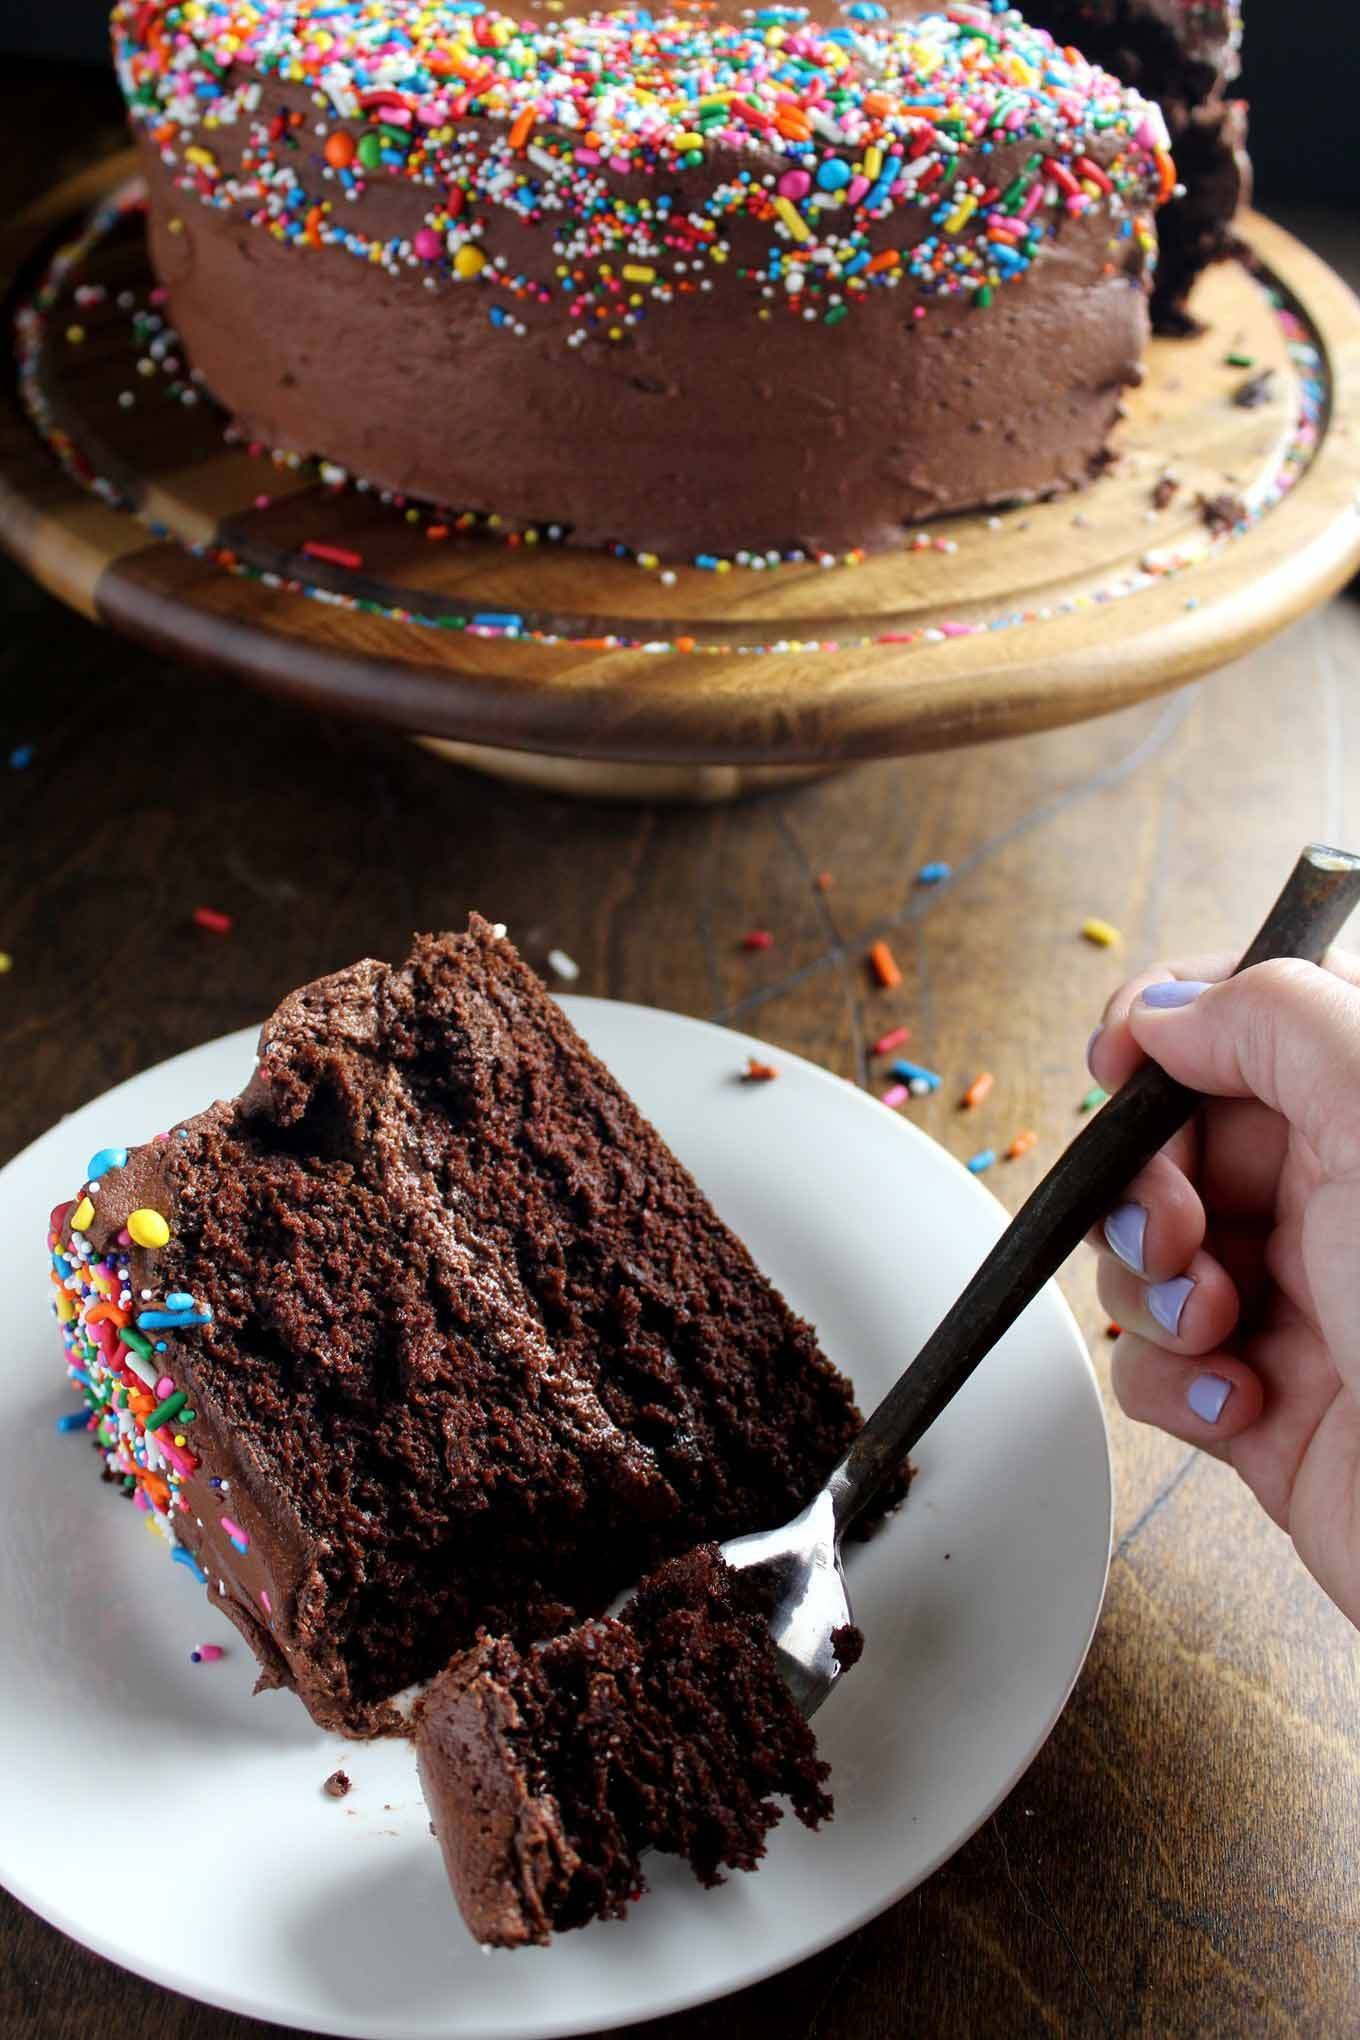 Best ideas about Chocolate Cake Birthday
. Save or Pin Classic Chocolate Birthday Cake Now.